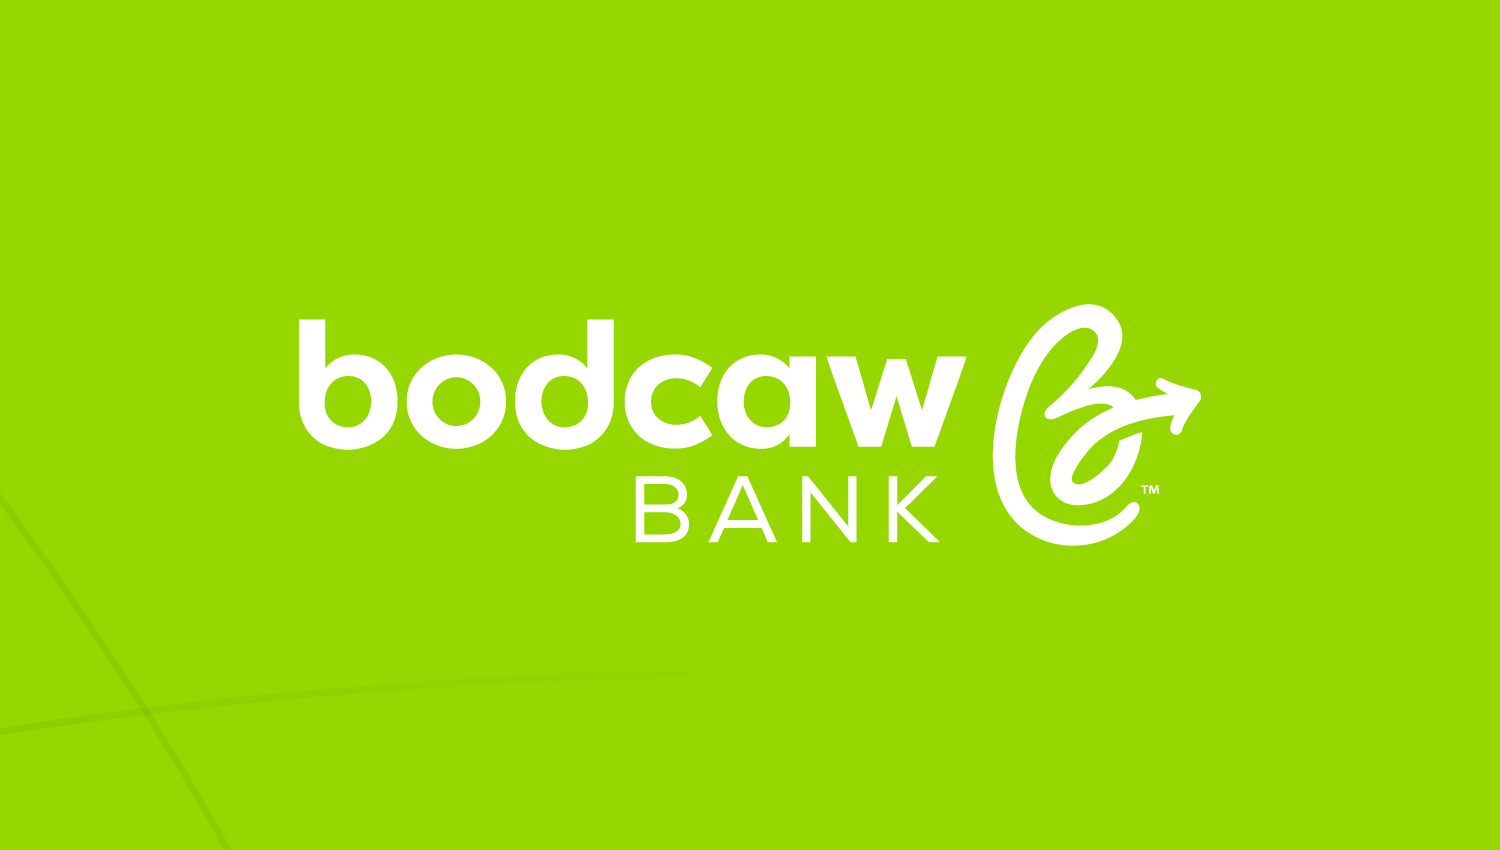 Bodcaw Bank logo